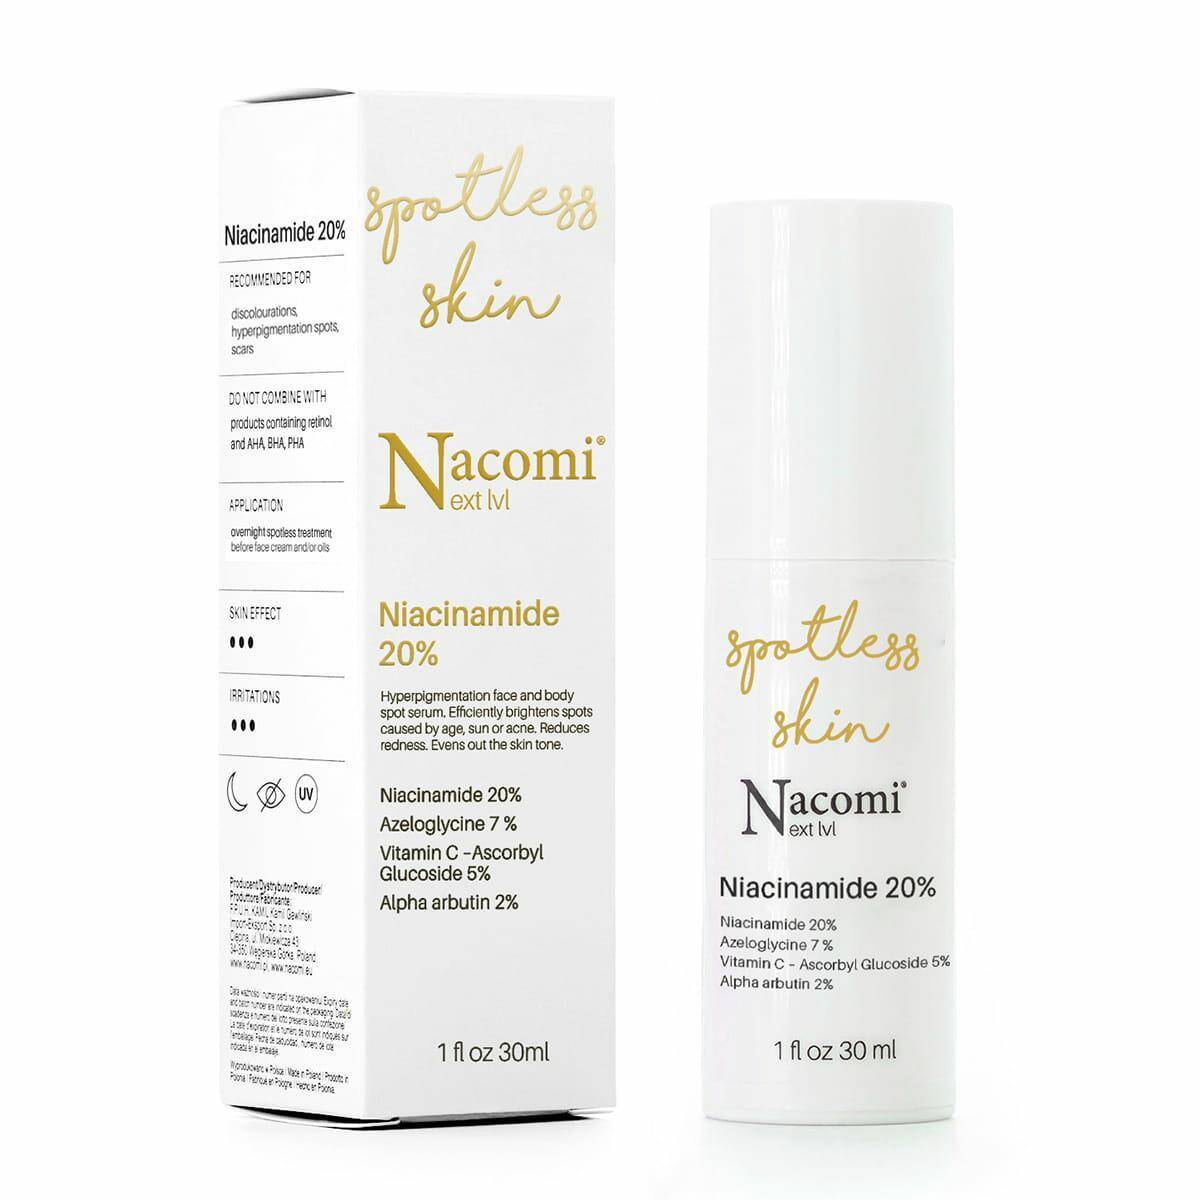 Nacomi next lvl serum Niacynamid20% 30ml